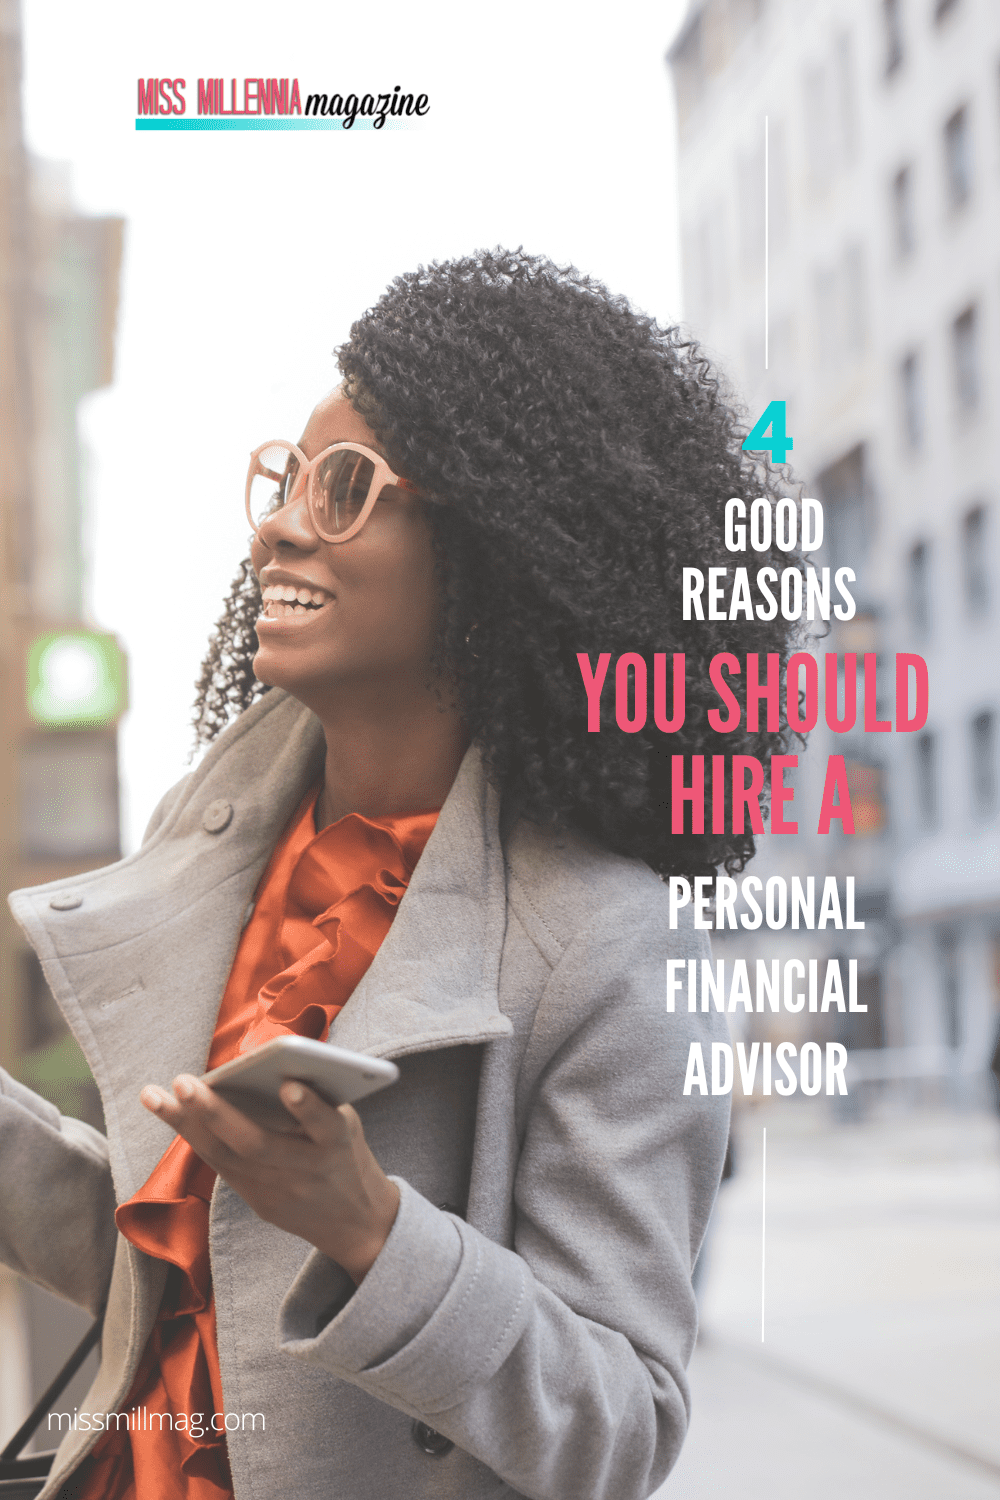 4 Good Reasons You Should Hire a Personal Financial Advisor